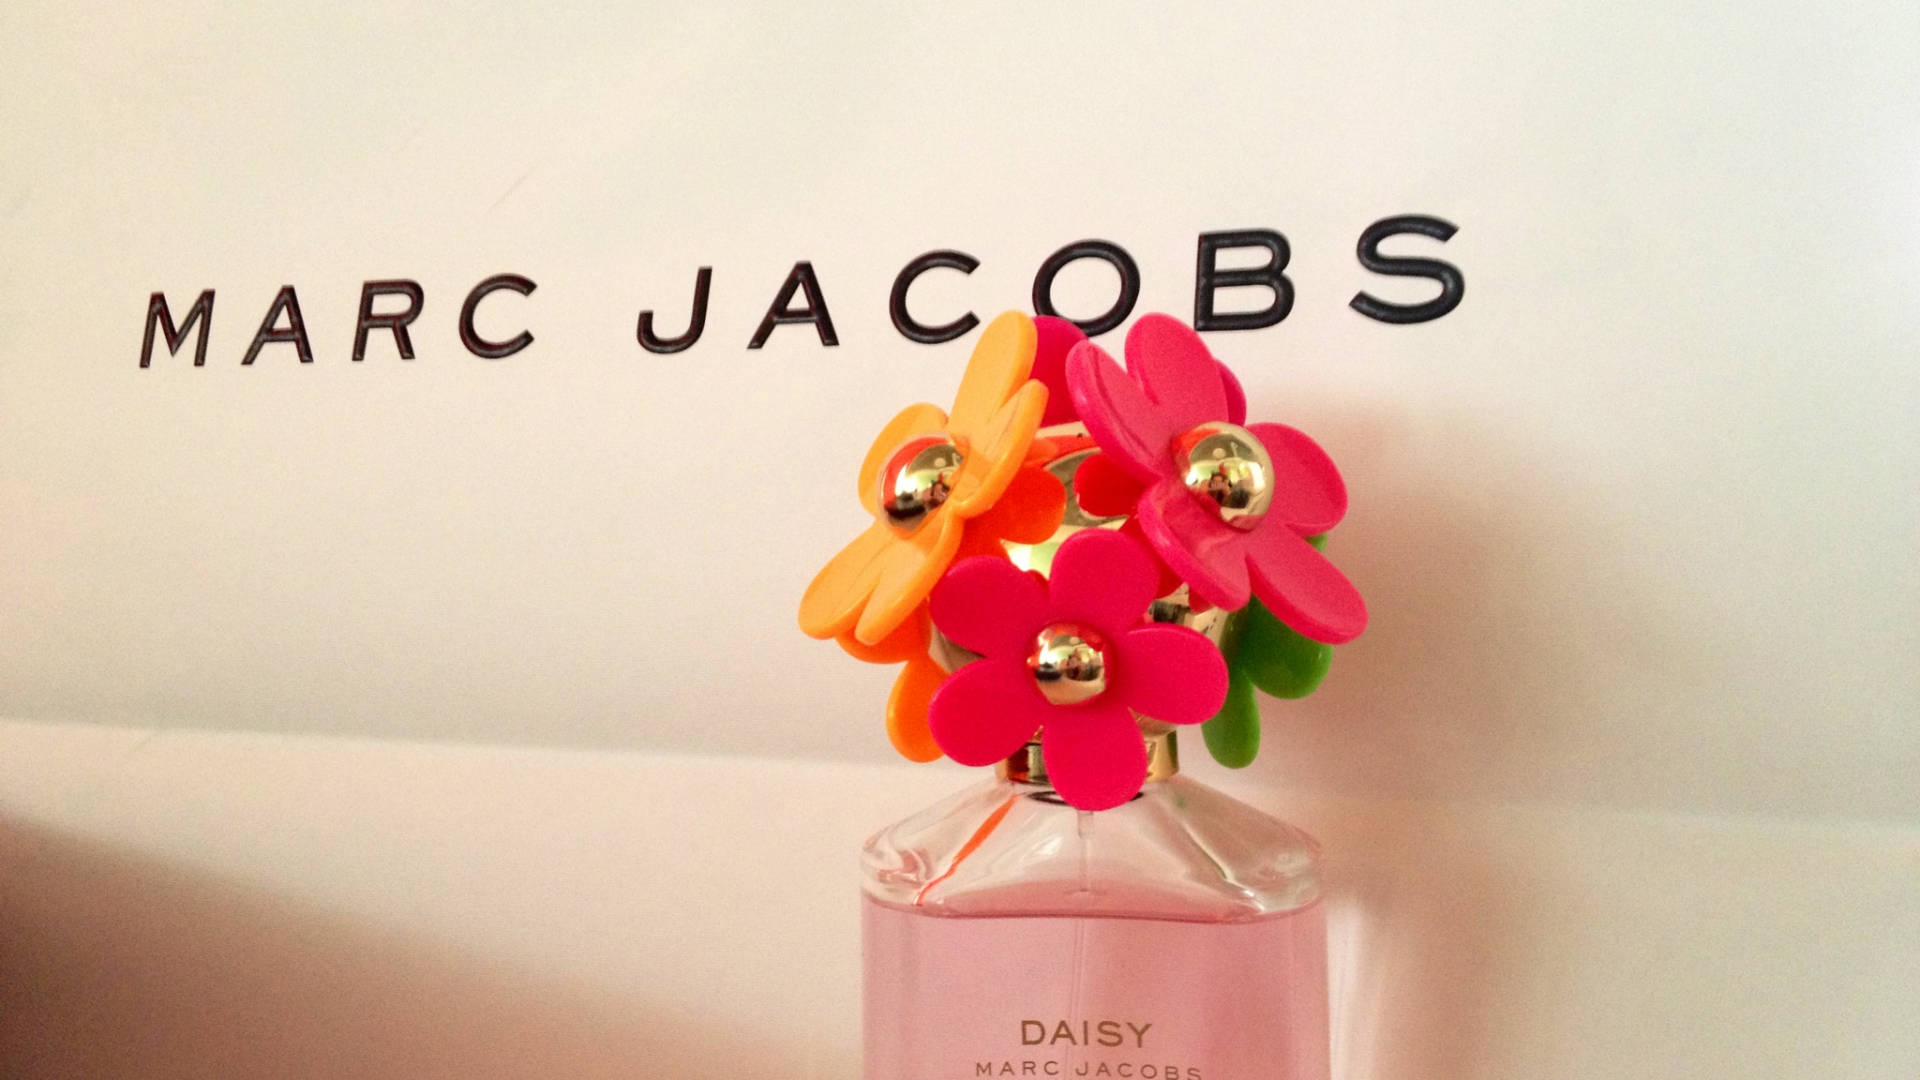 Marc Jacobs Daisy Fresh Perfume Background